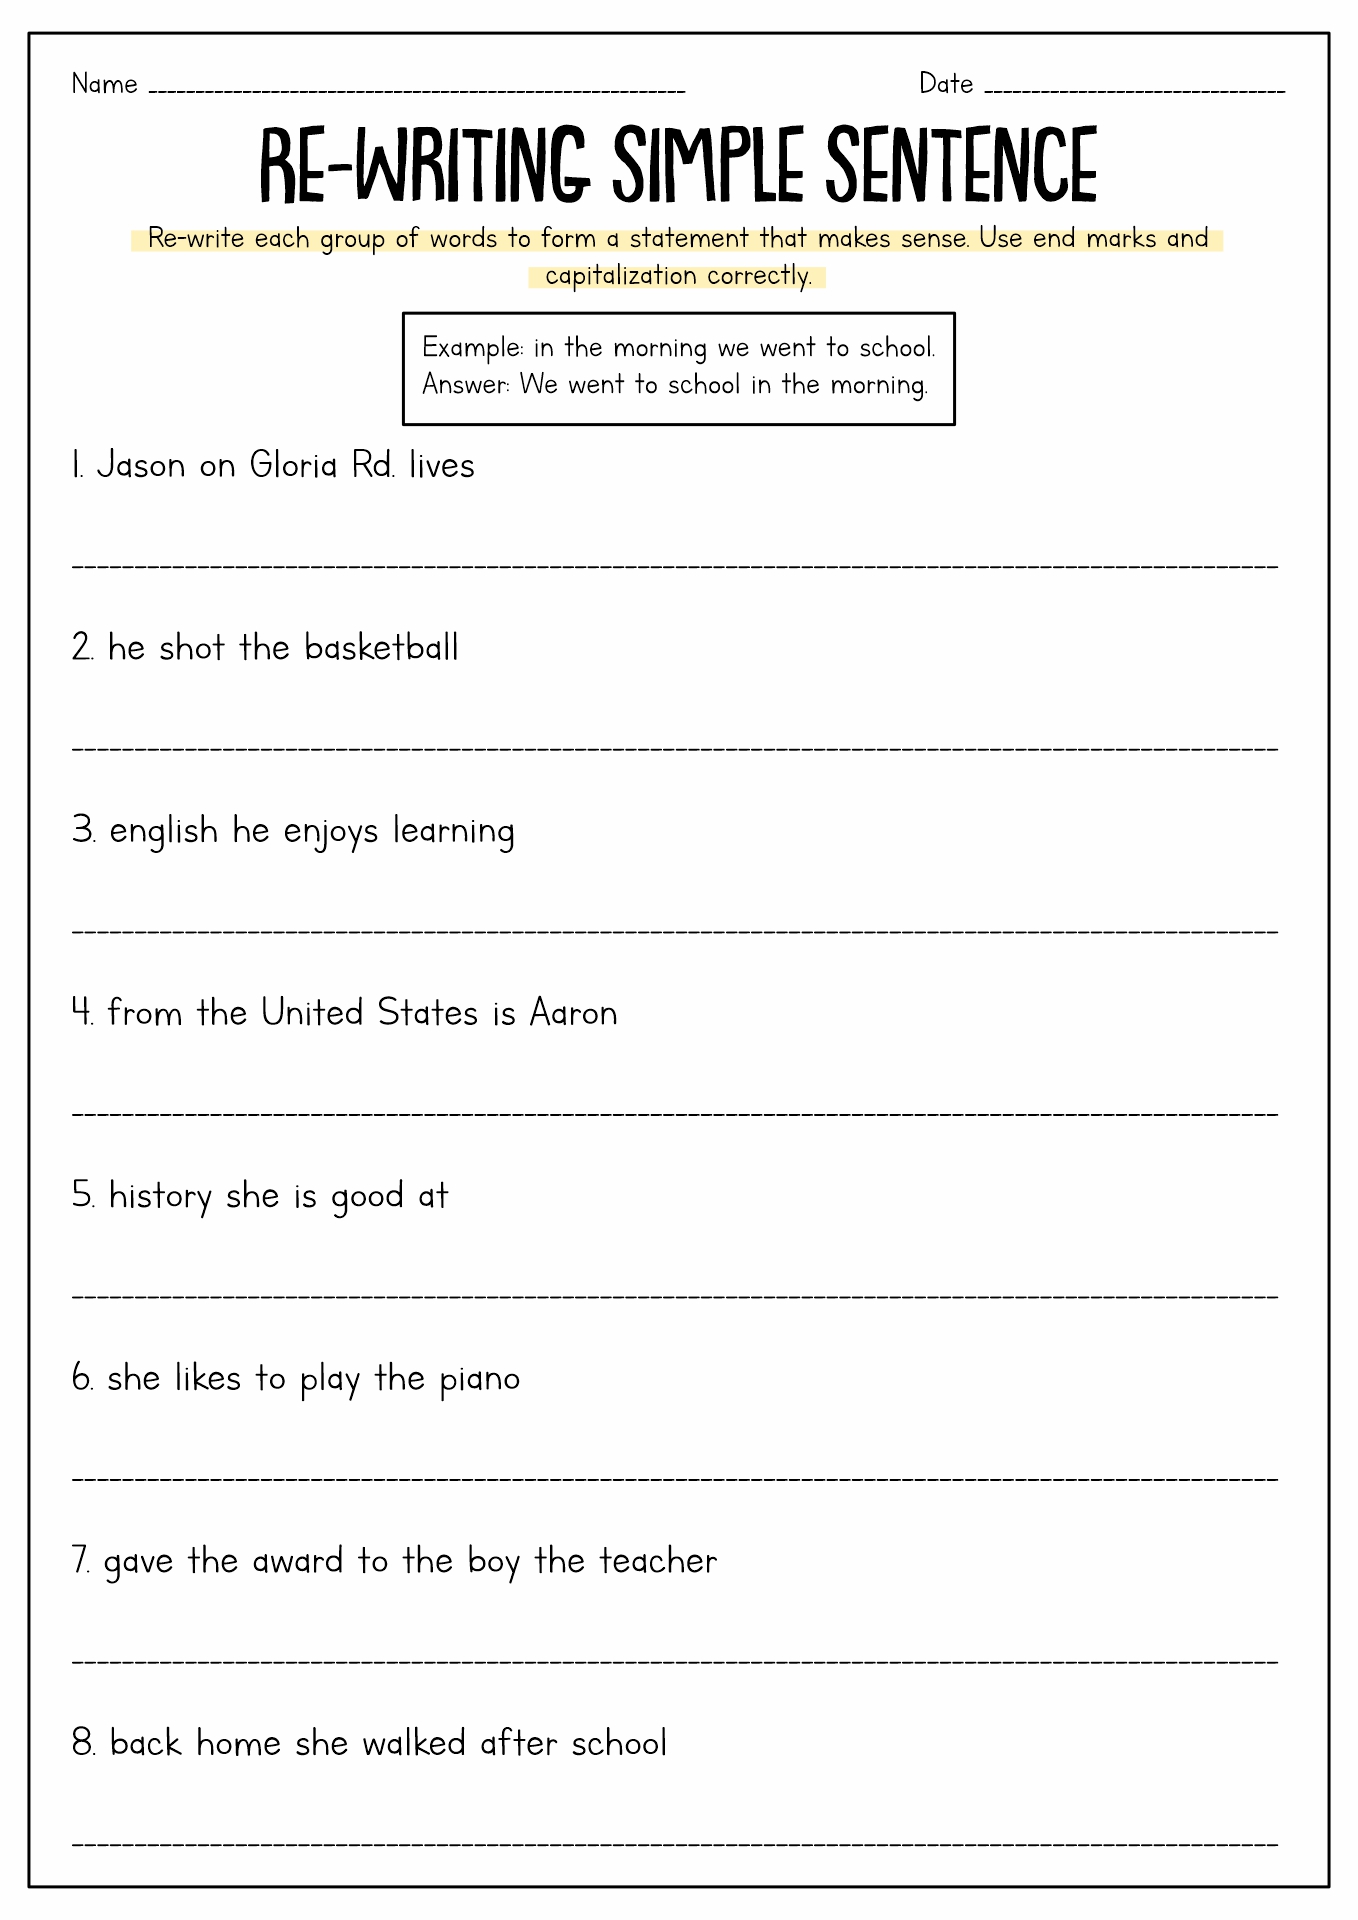 Simple Sentence Worksheets 7th Grade Image